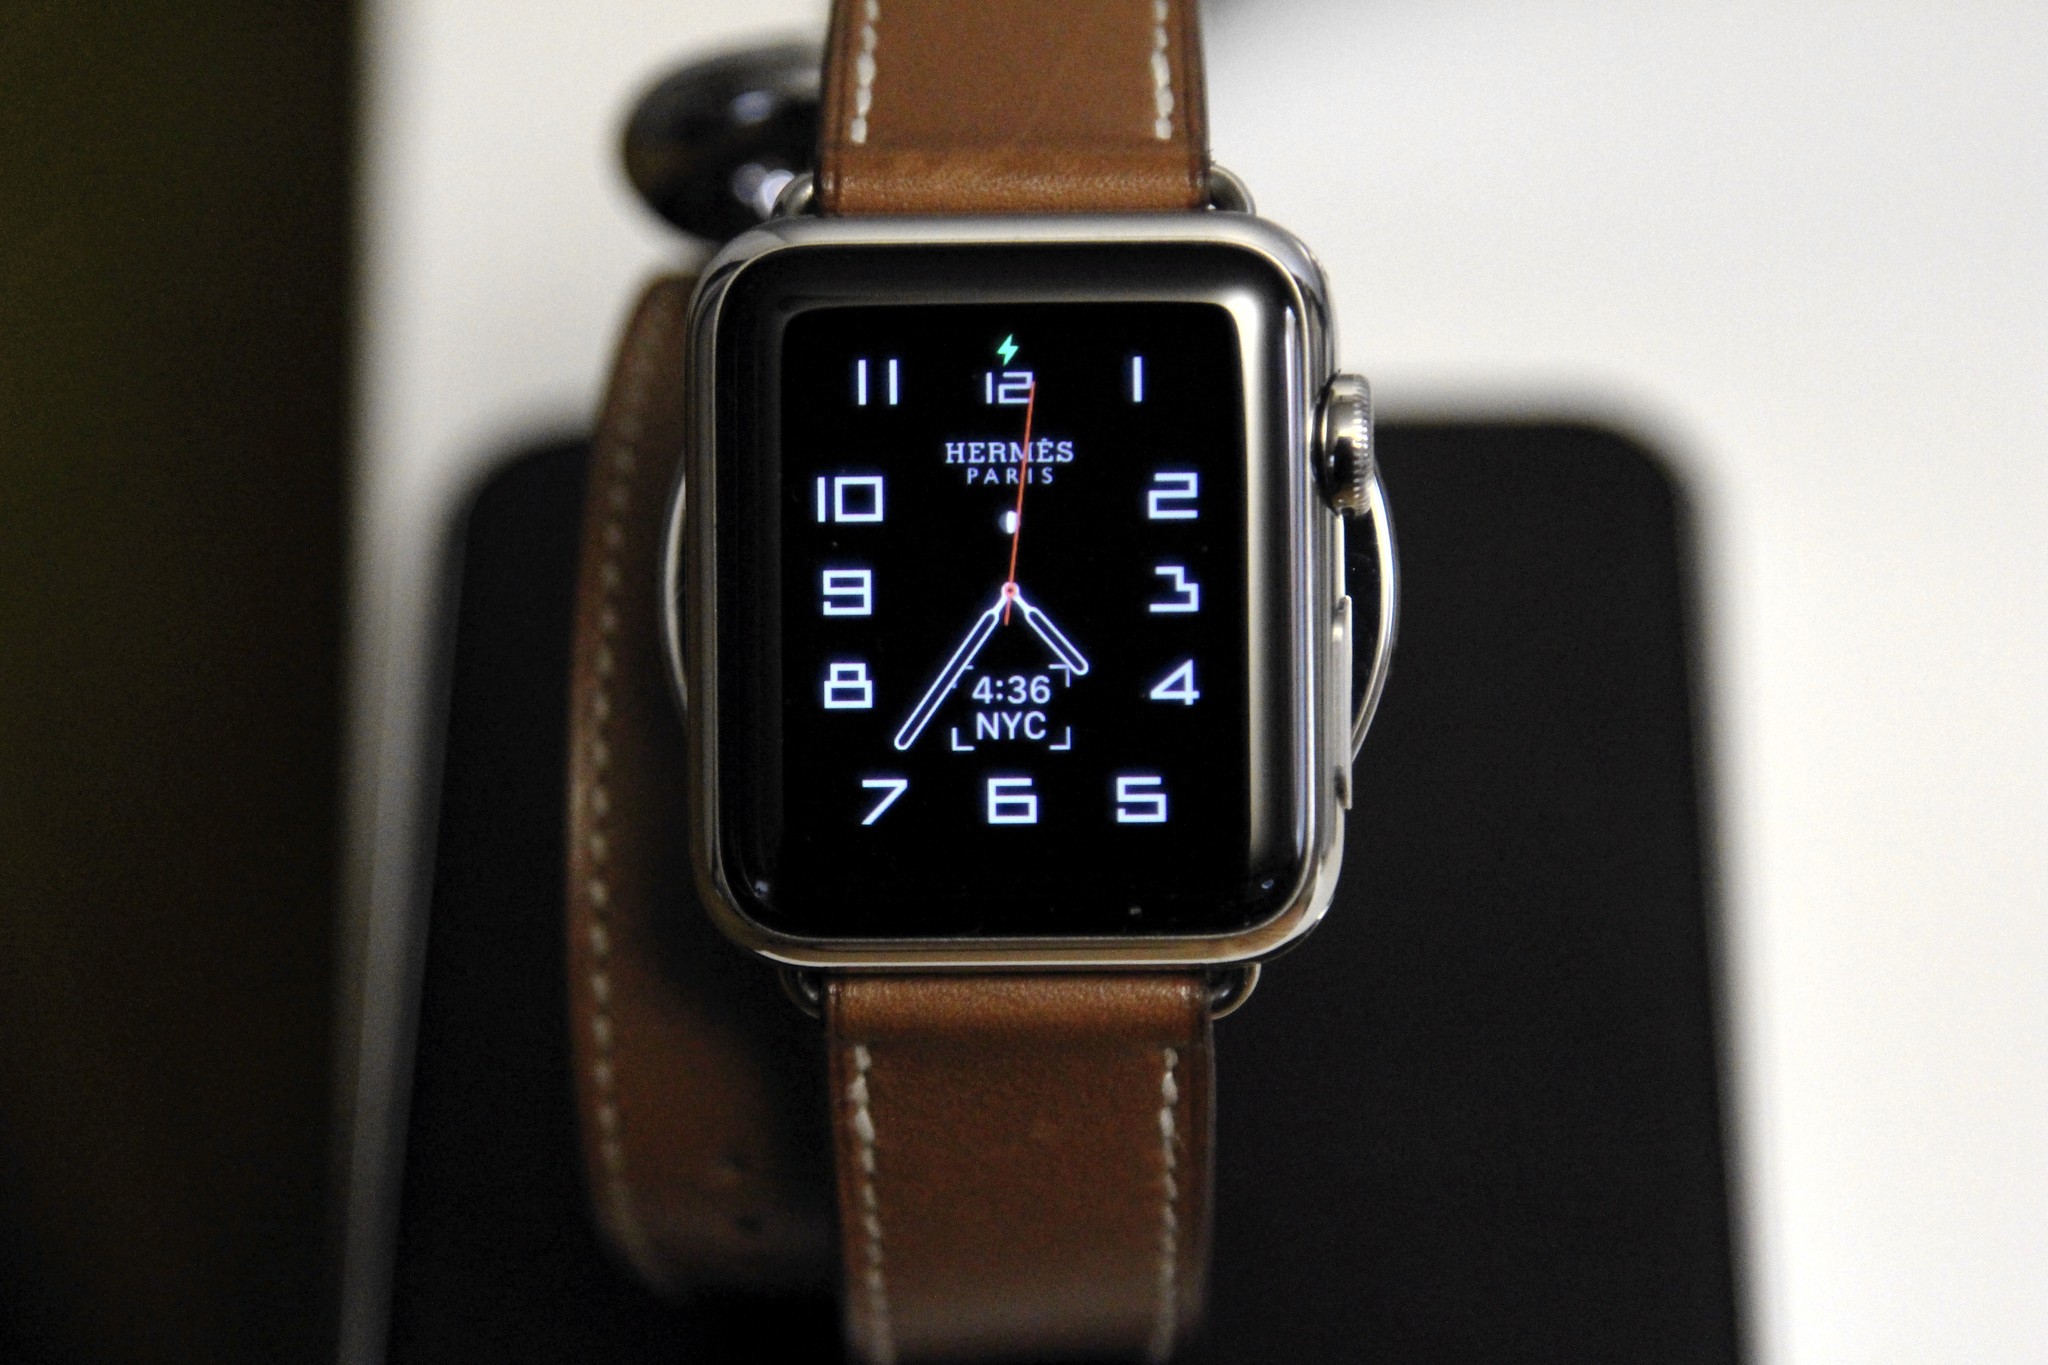 The Hermes custom Apple Watch face 